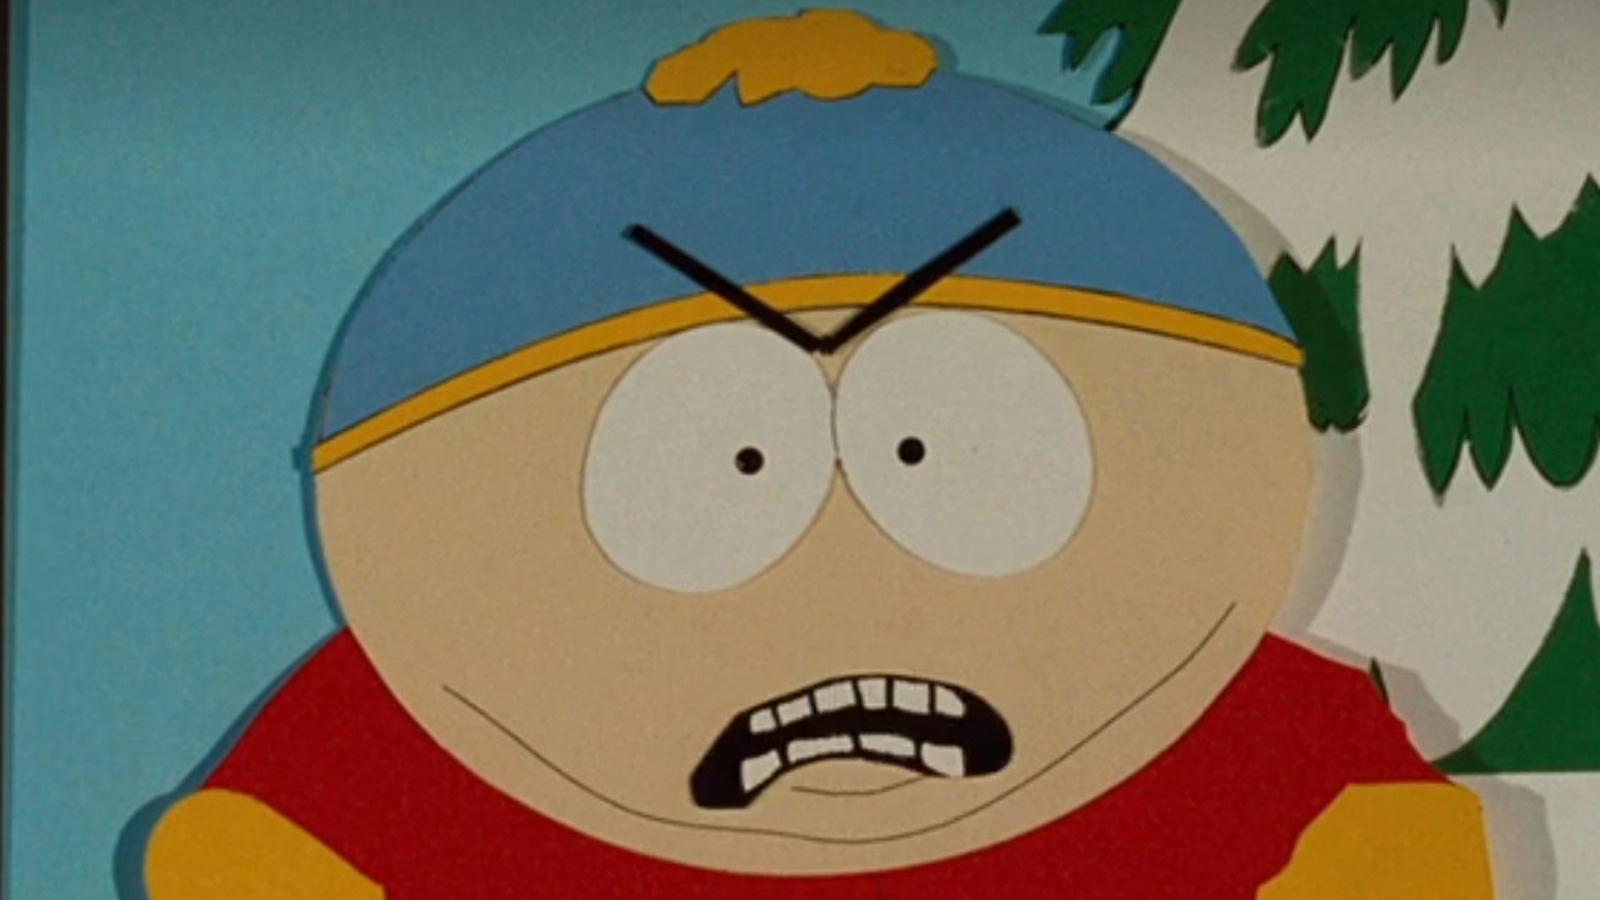 South Park: The Streaming Wars' Ending — [Spoiler] Returns In